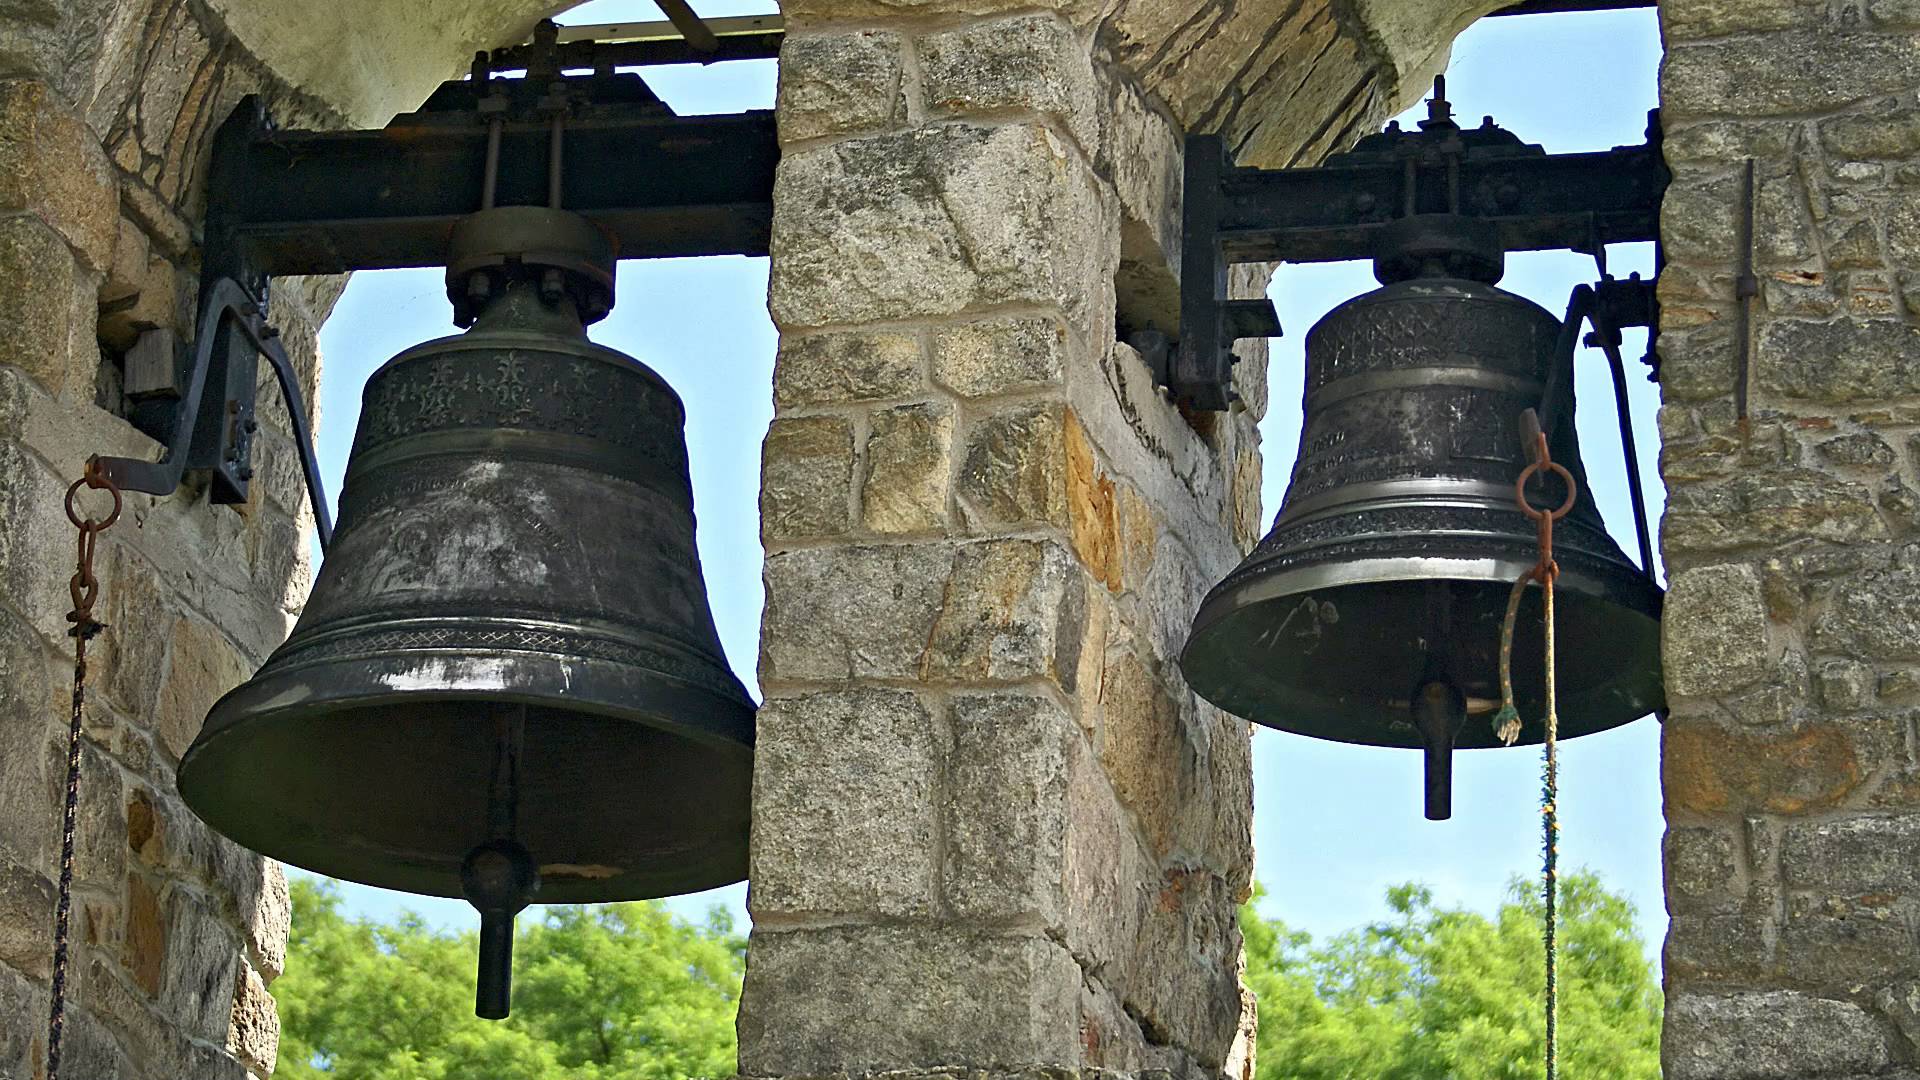 Church Bell Creepy Sound Effect - YouTube